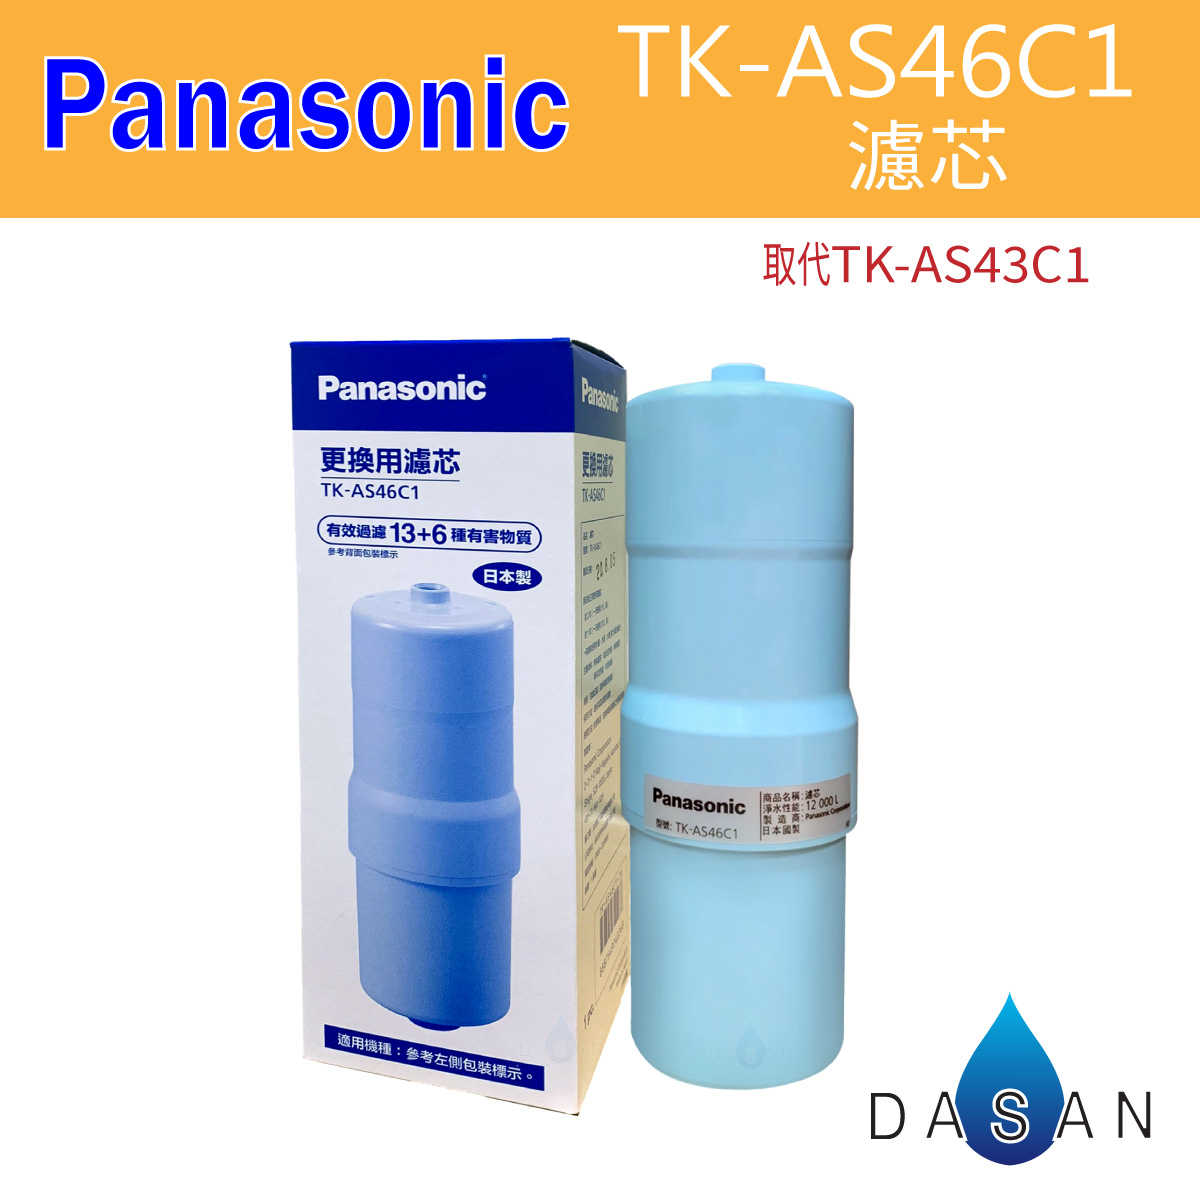 【Panasonic】國際牌 TK-AS46C1 取代TKAS43C1 AS46C1 鹼性離子整水器 電解水專用 濾芯